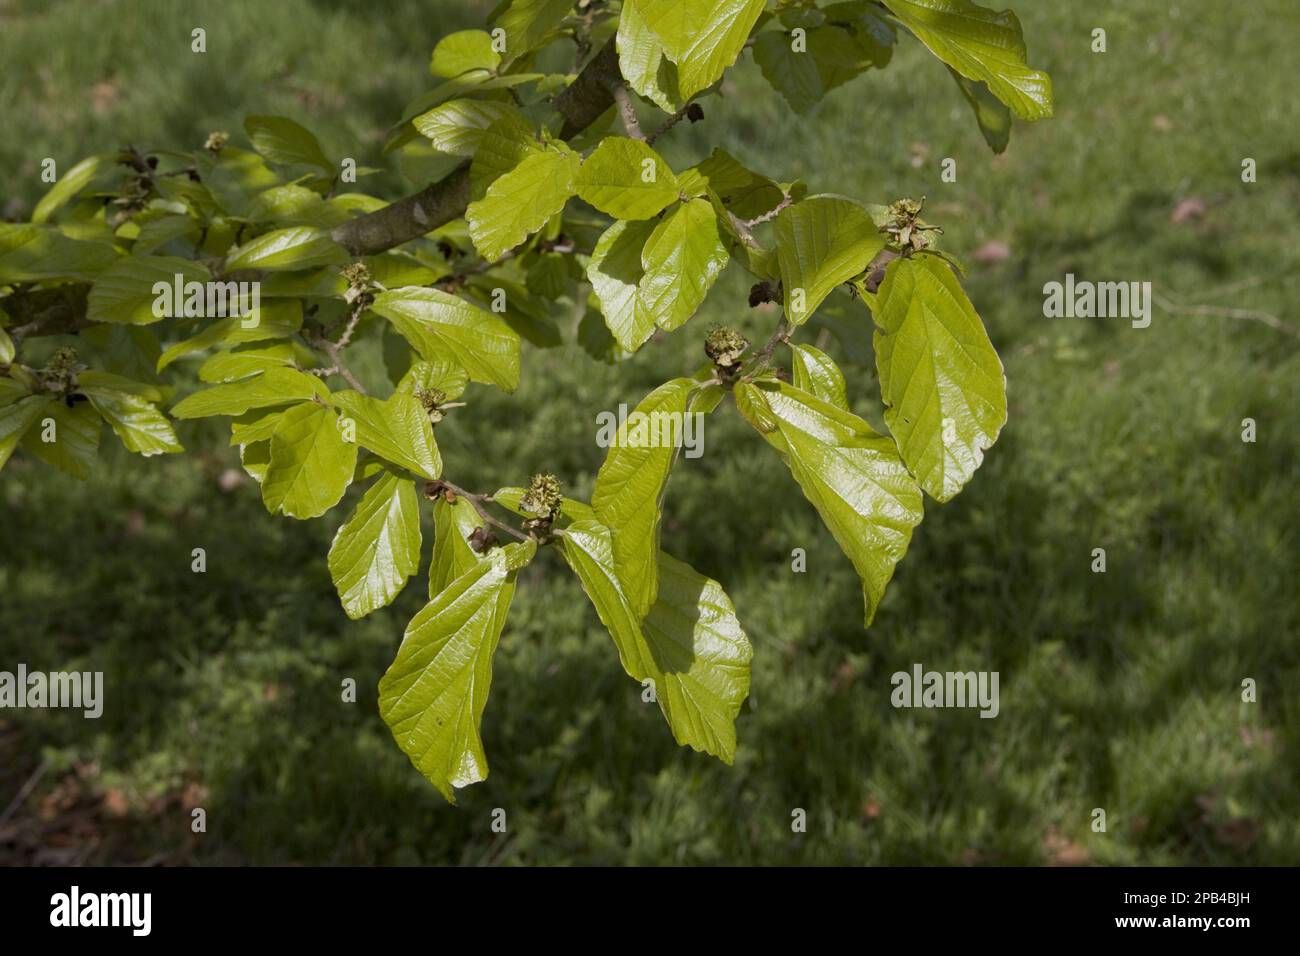 Parrotia, bois d'ironce persan (Parrotia persica), bois d'ironce persan, famille des noisettes sorcières, feuilles de printemps de l'ironwood persan Banque D'Images